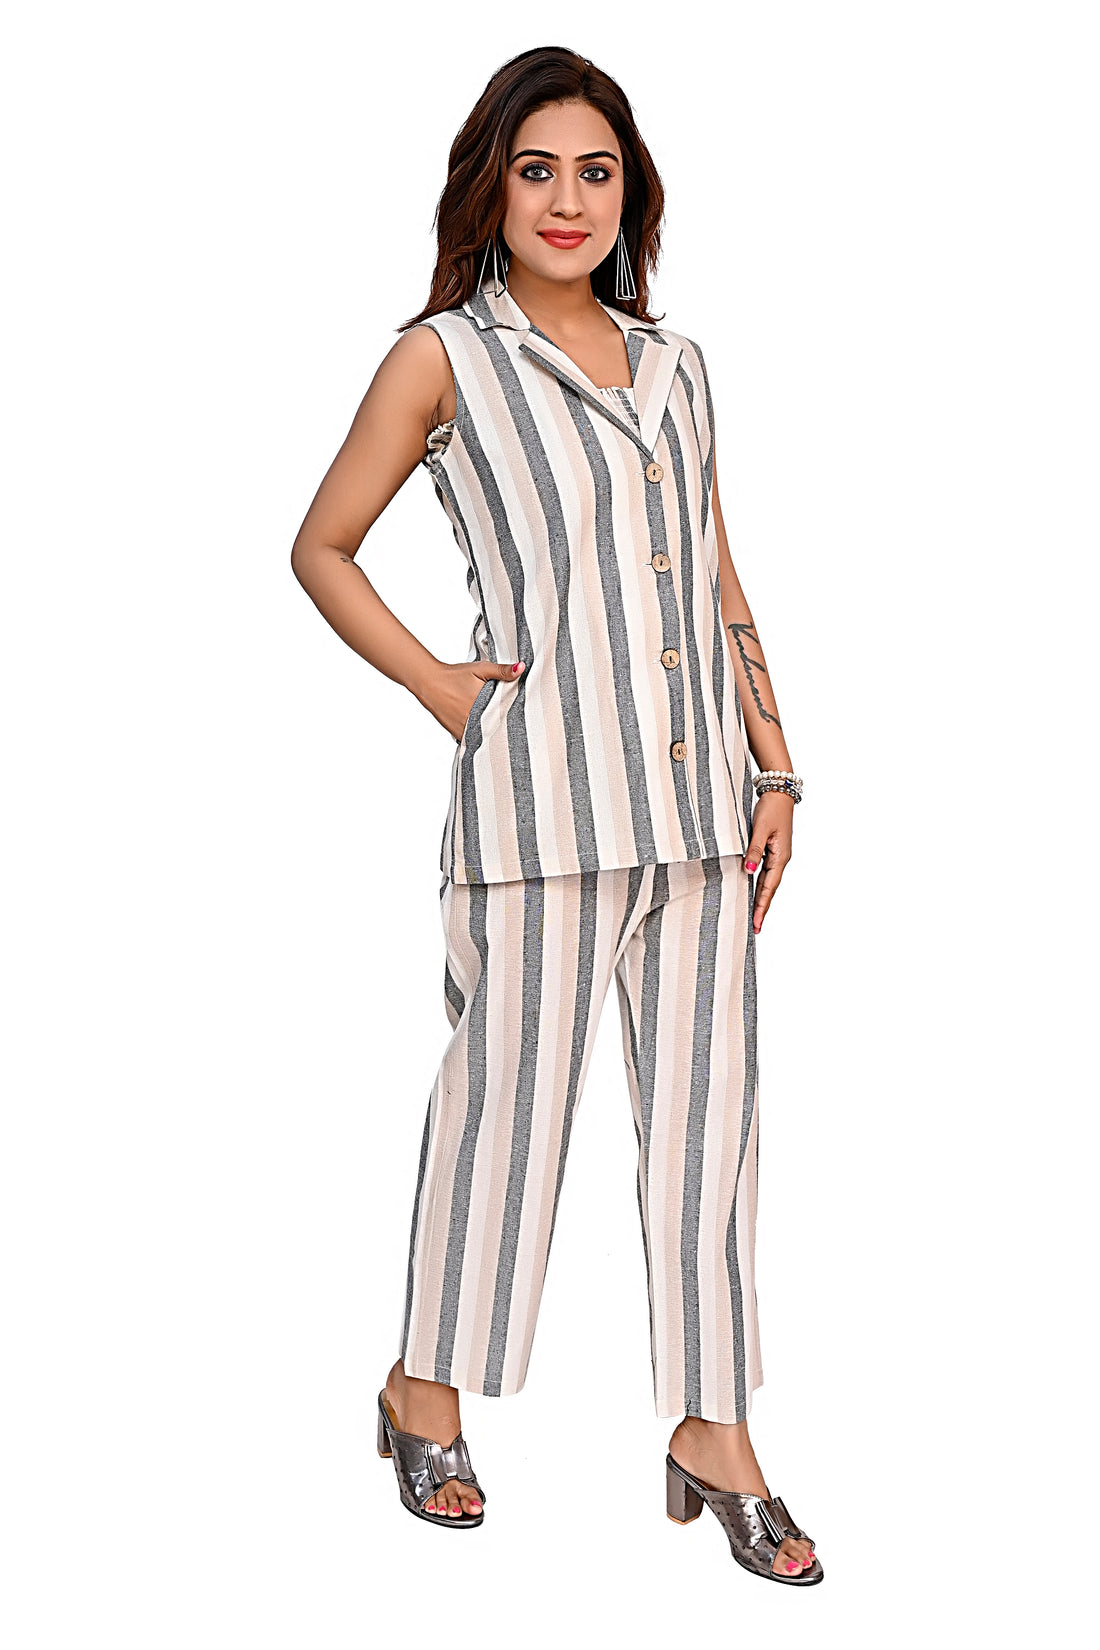 Nirmal online Premium Cotton Stripe co-ord set for Women in Grey Colour